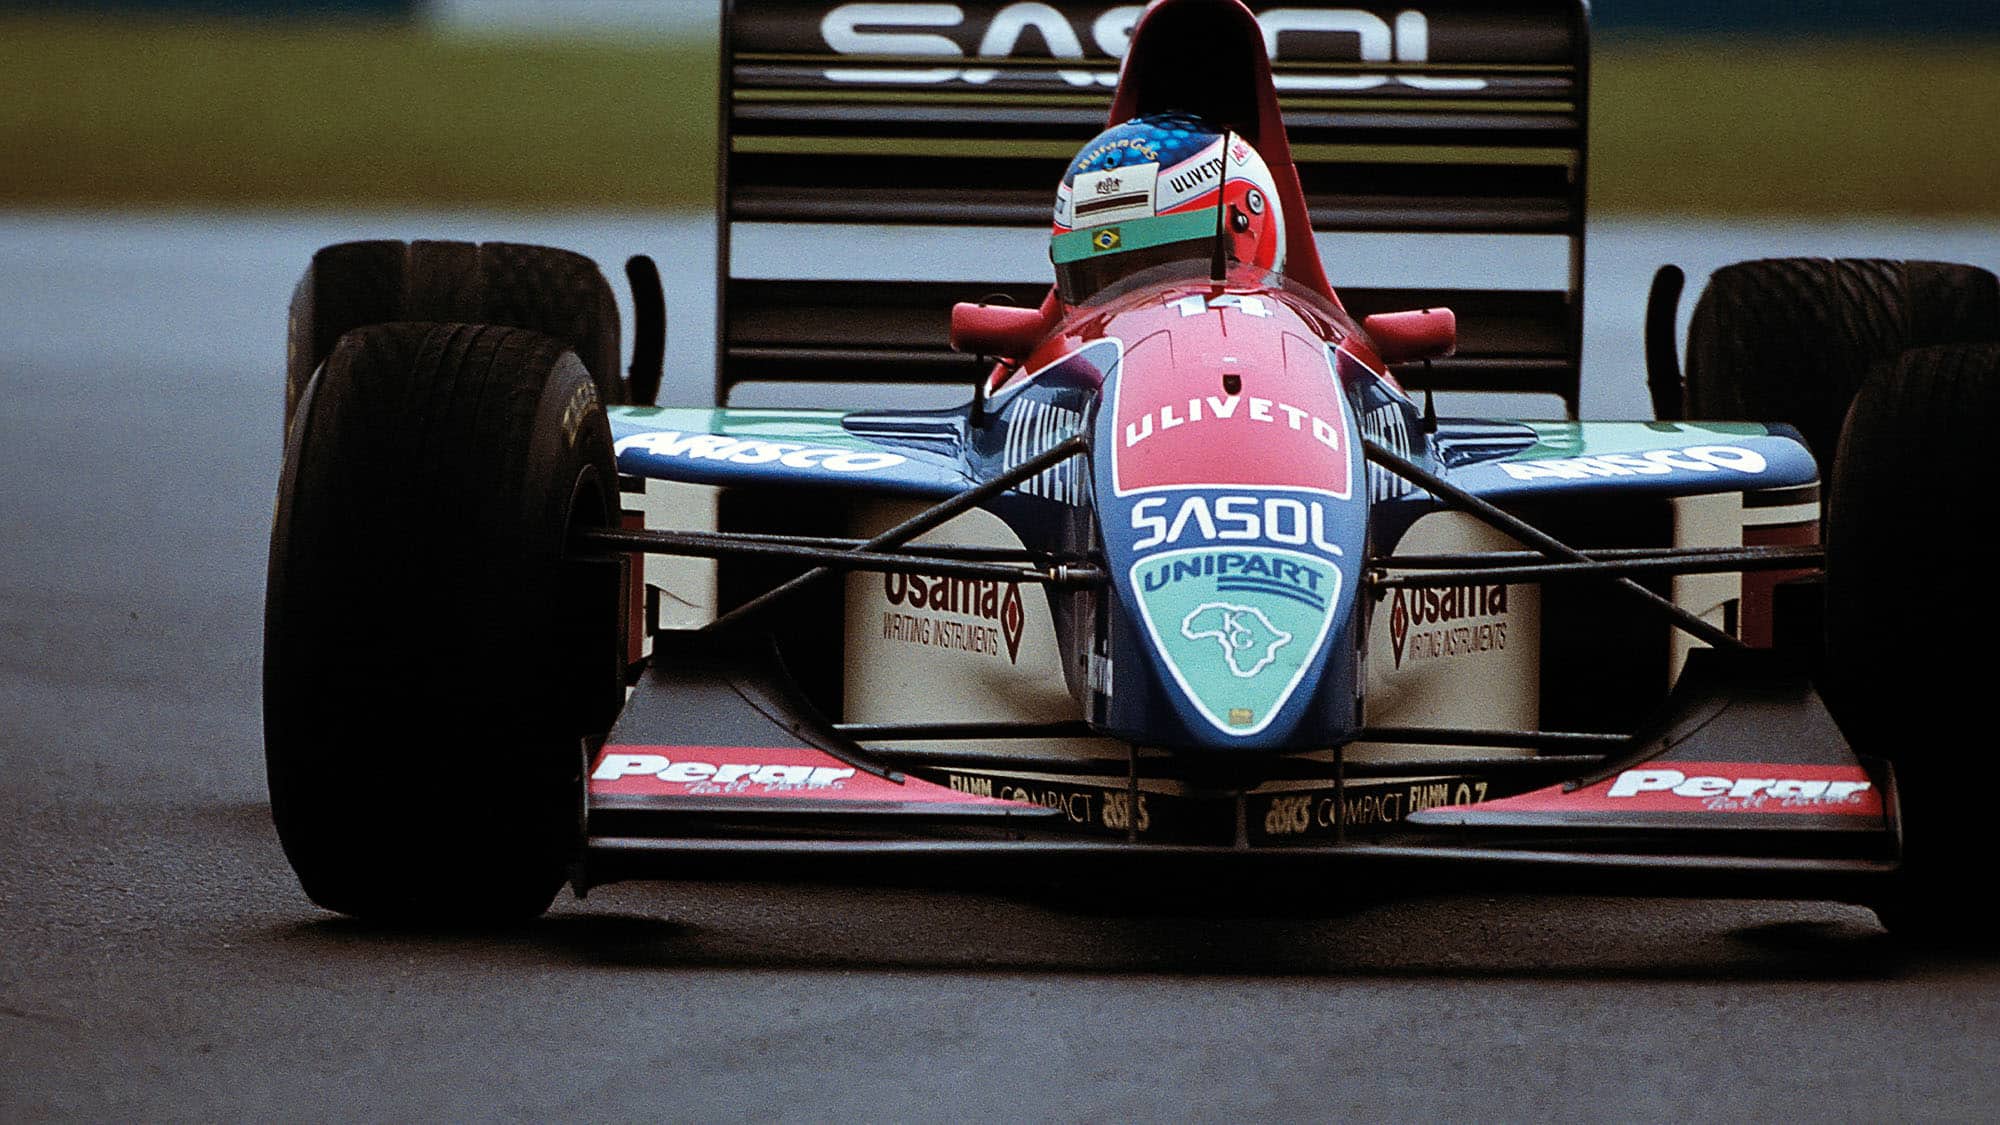 Jordan 193 of Rubens Barrichello